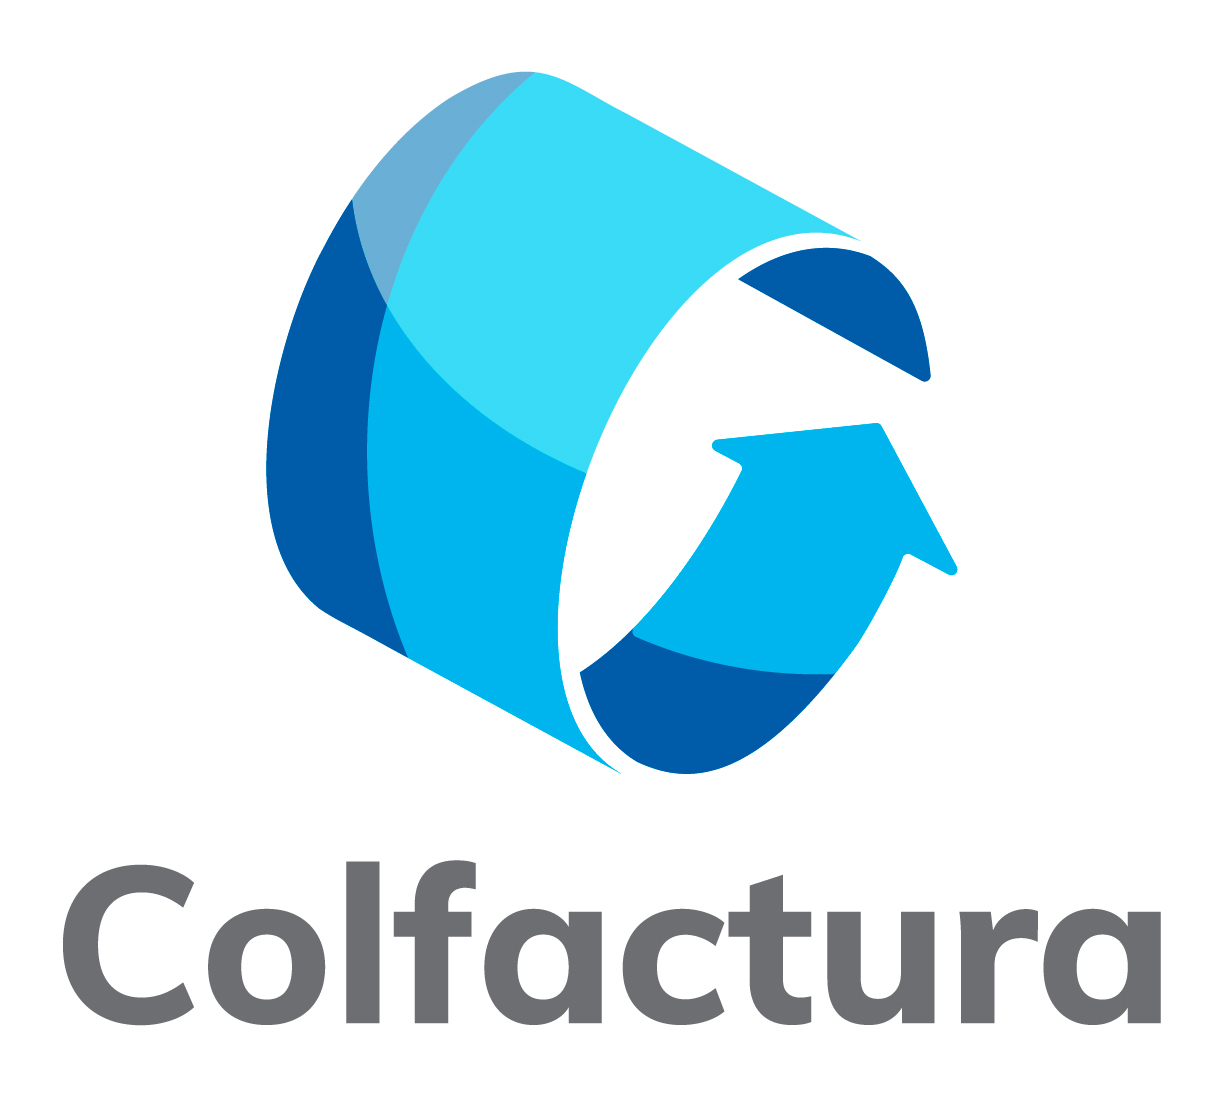 Logotipo Colfactura -vertical fondo blanco